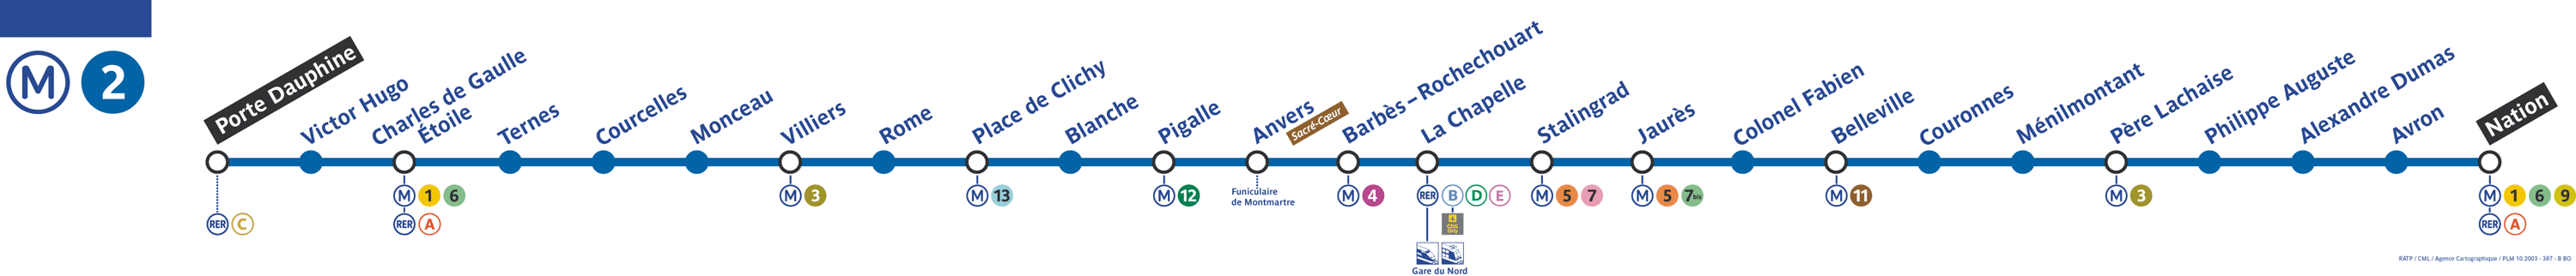 Métro Paris - ligne 2